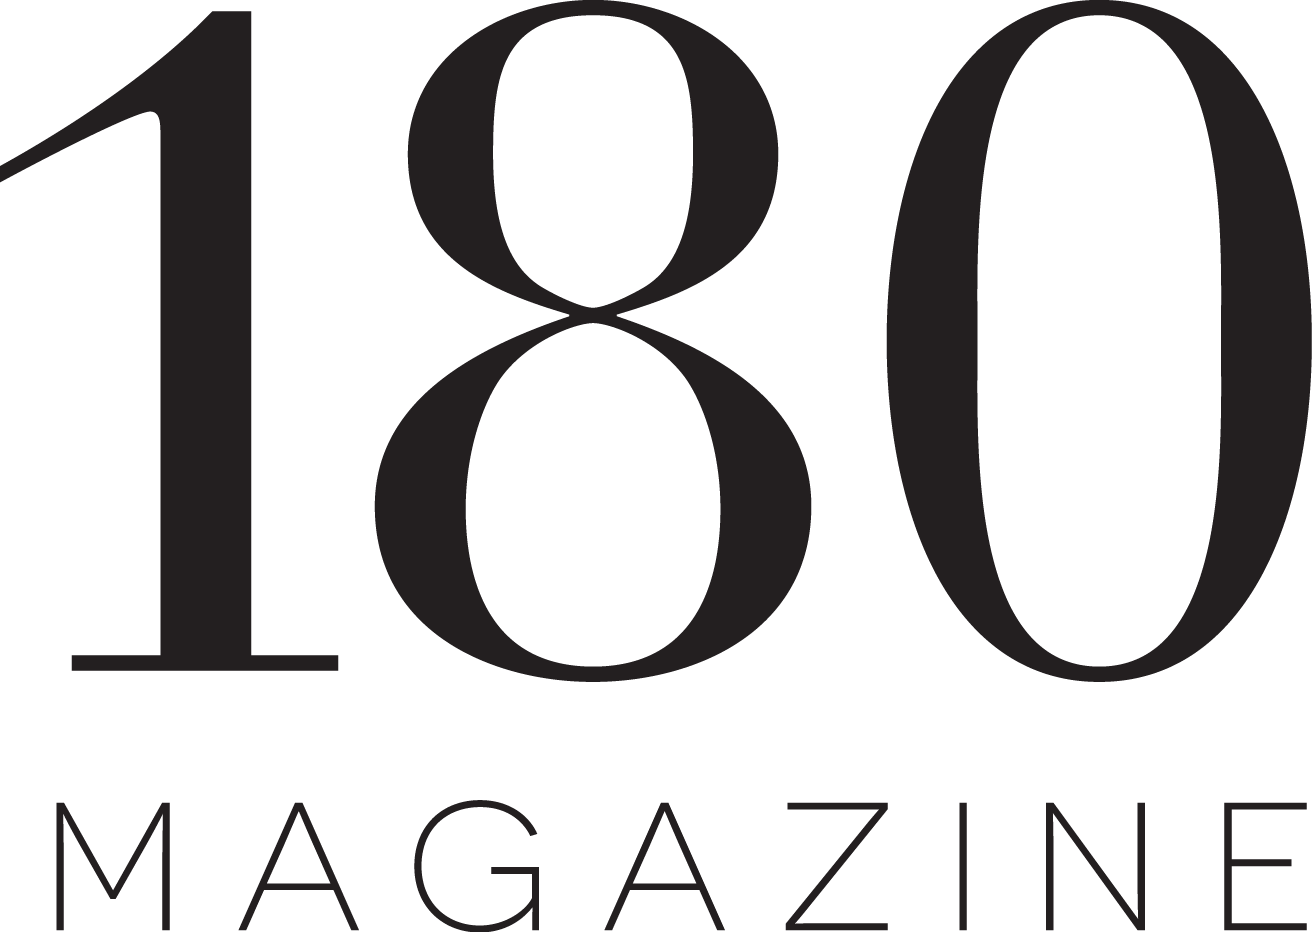 180 Magazine